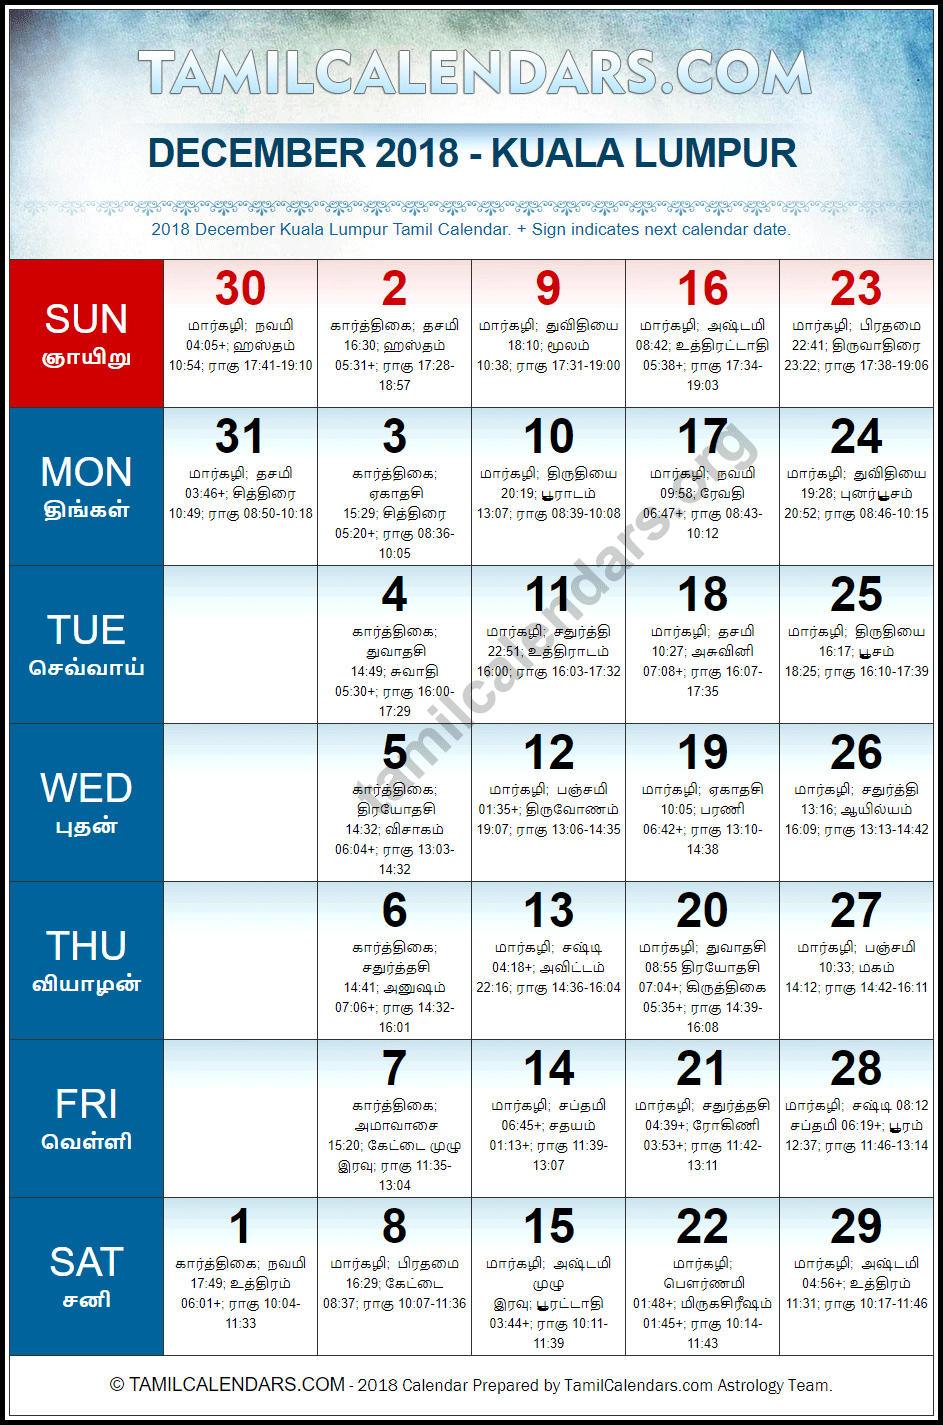 December 2018 Tamil Calendar for Malaysia (Kuala Lumpur)